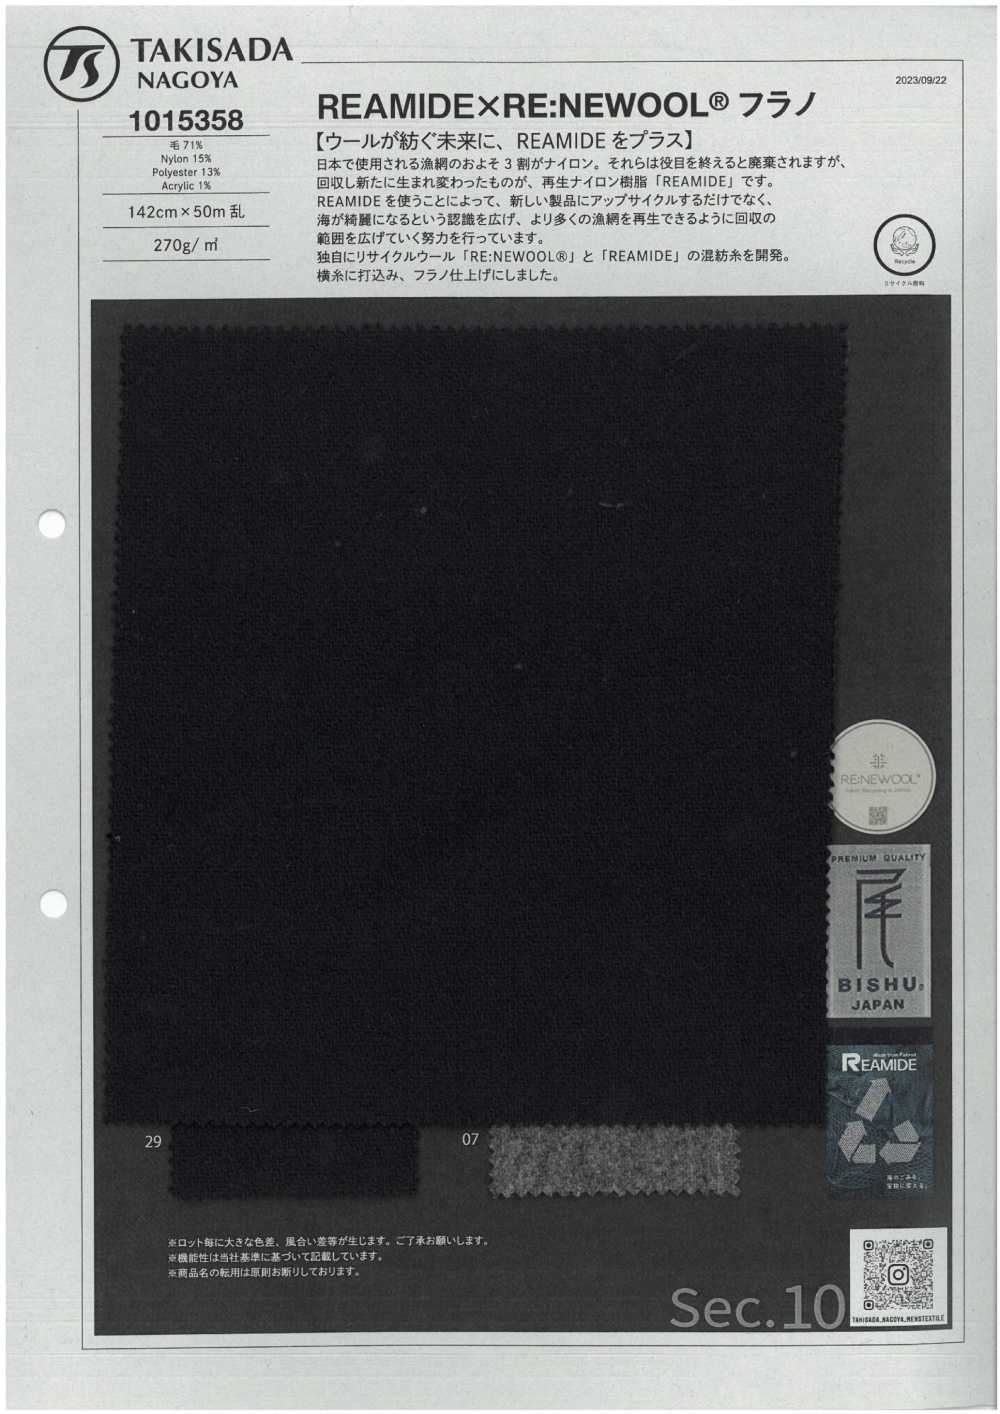 1015358 REAMIDE×RE:NEWOOL(R) Vải Dạ Flannel Takisada Nagoya